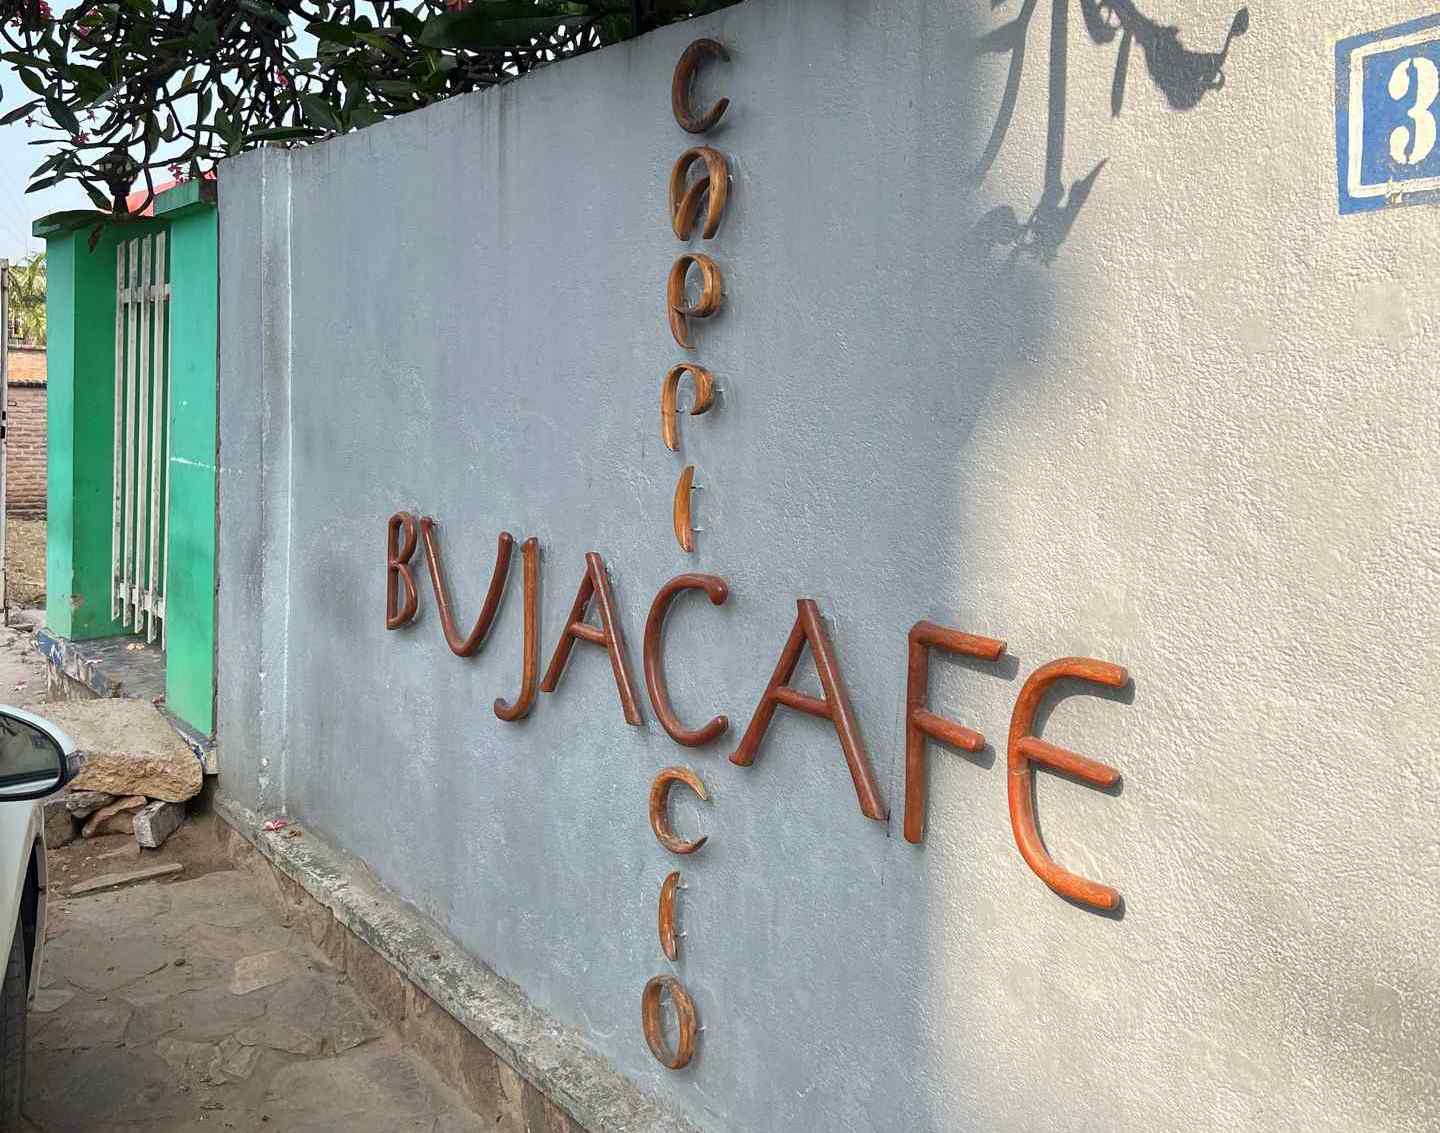 Bujacafe wall sign in Bujumbura, Burundi. Checking out Bujumbura